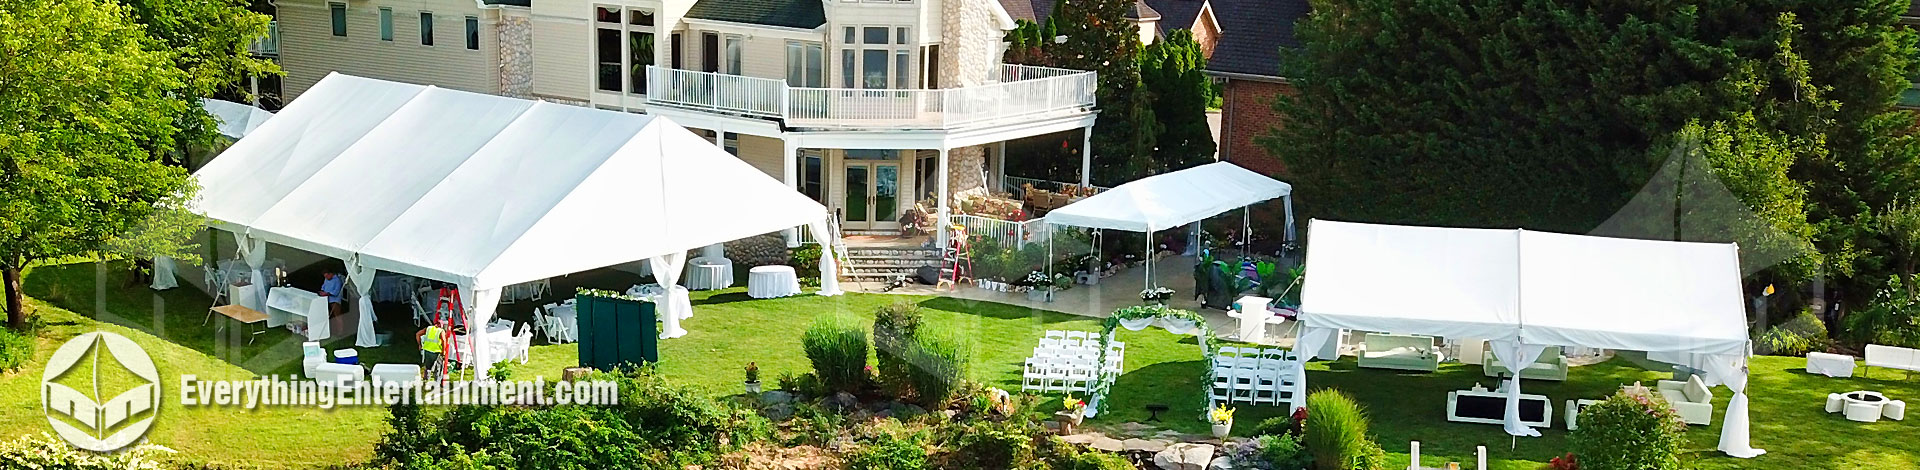 Several wedding tents setup in backyard